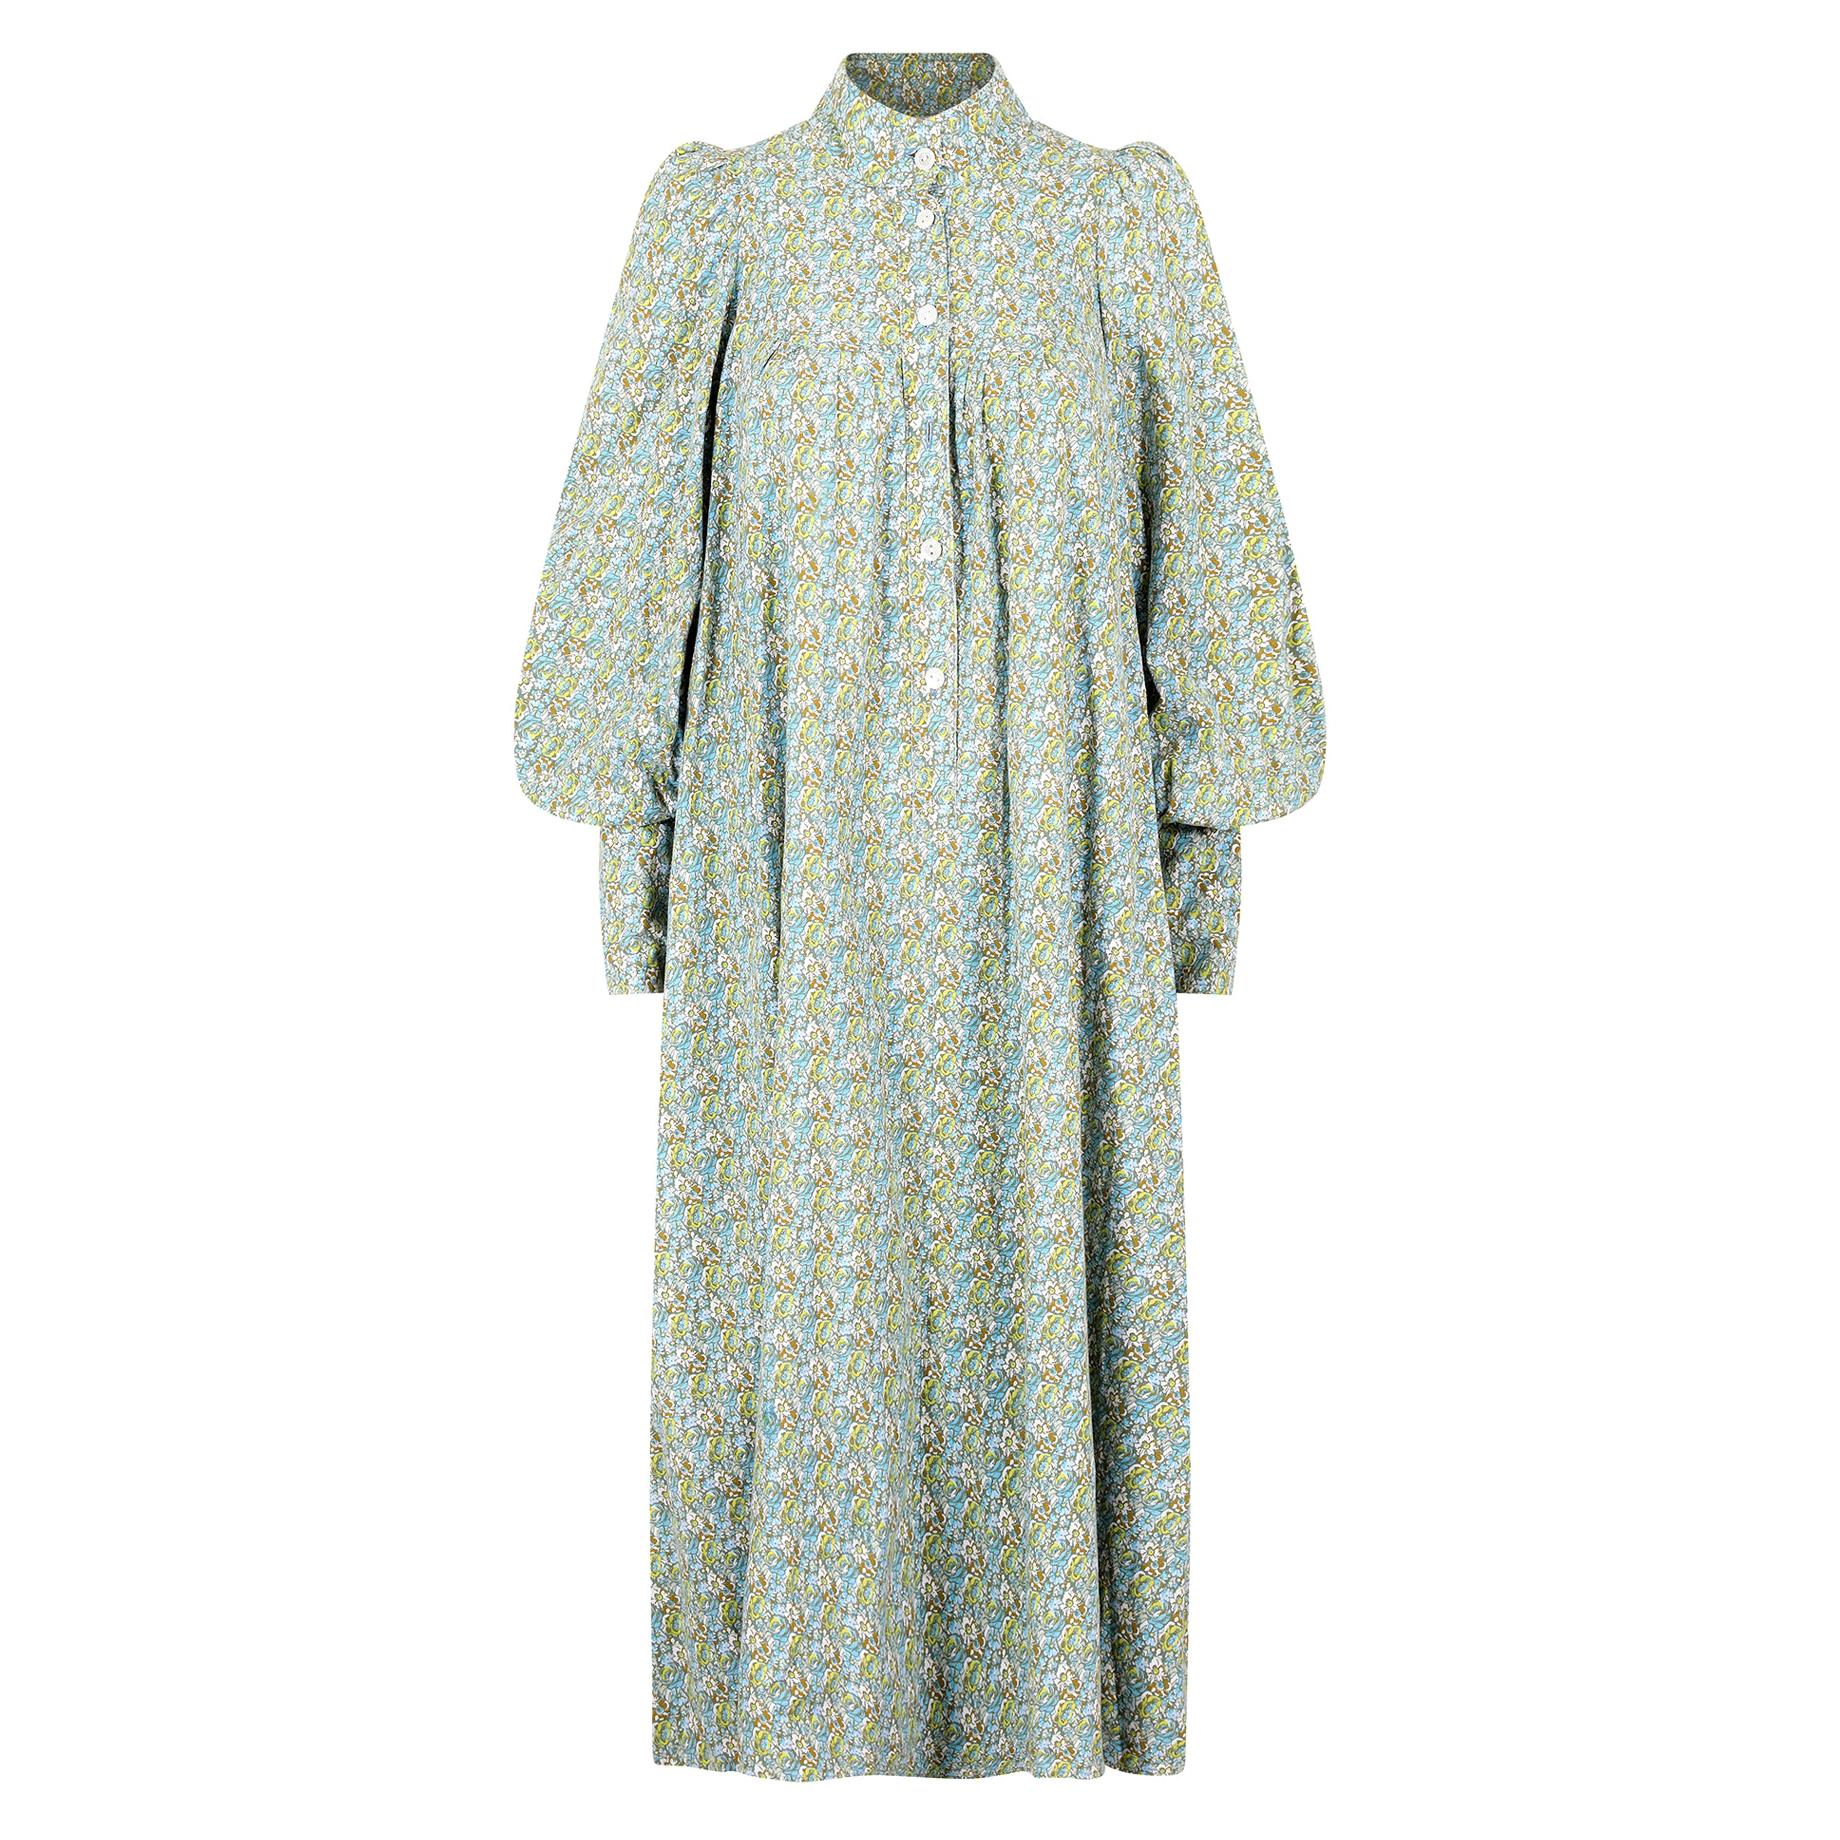 1970s Laura Ashley Floral Cotton Smock Dress